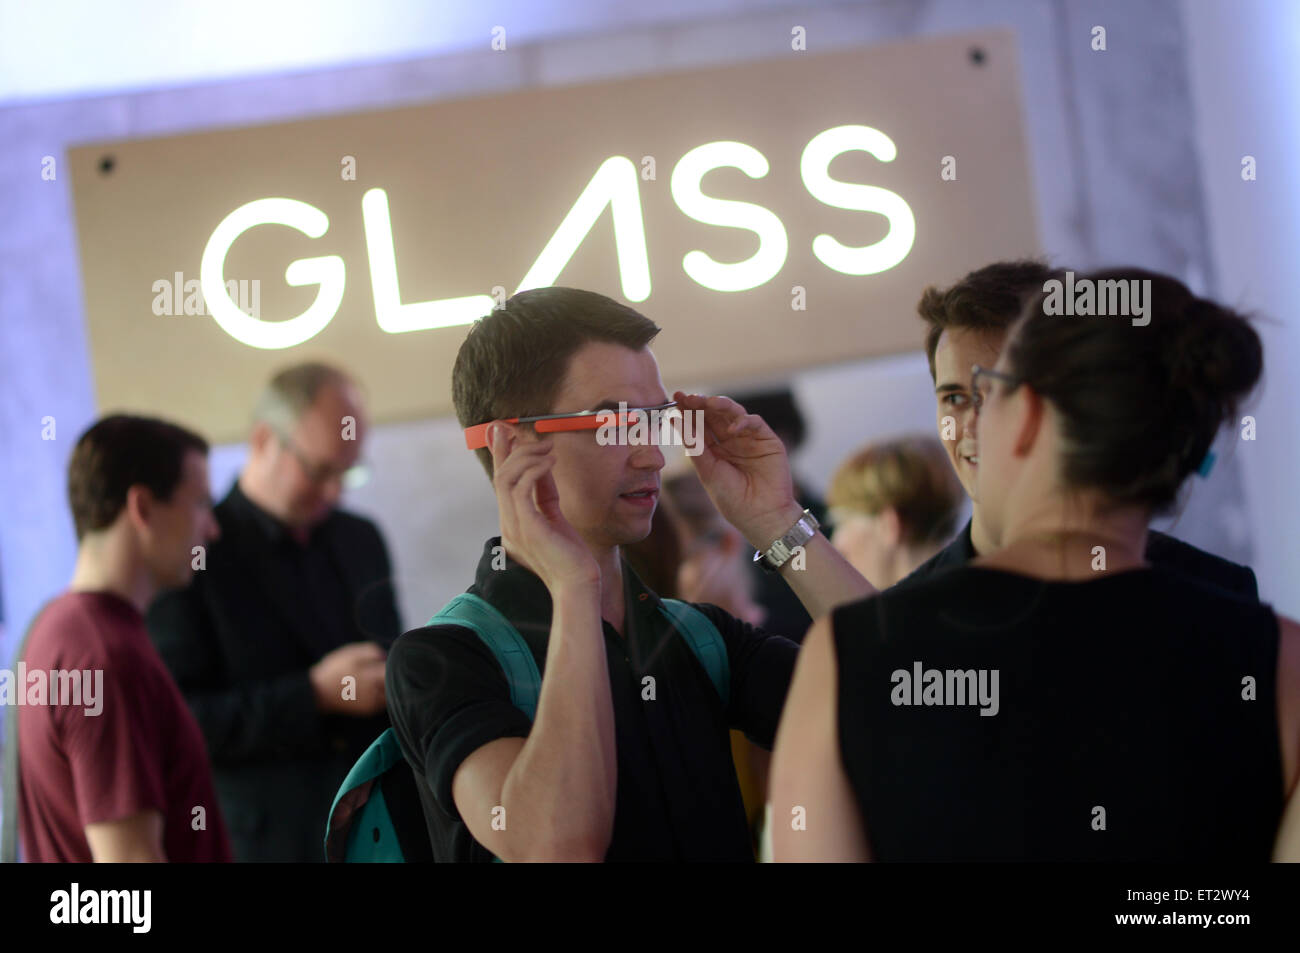 Berlin, Germany, presentation of data goggles Google Glass Stock Photo